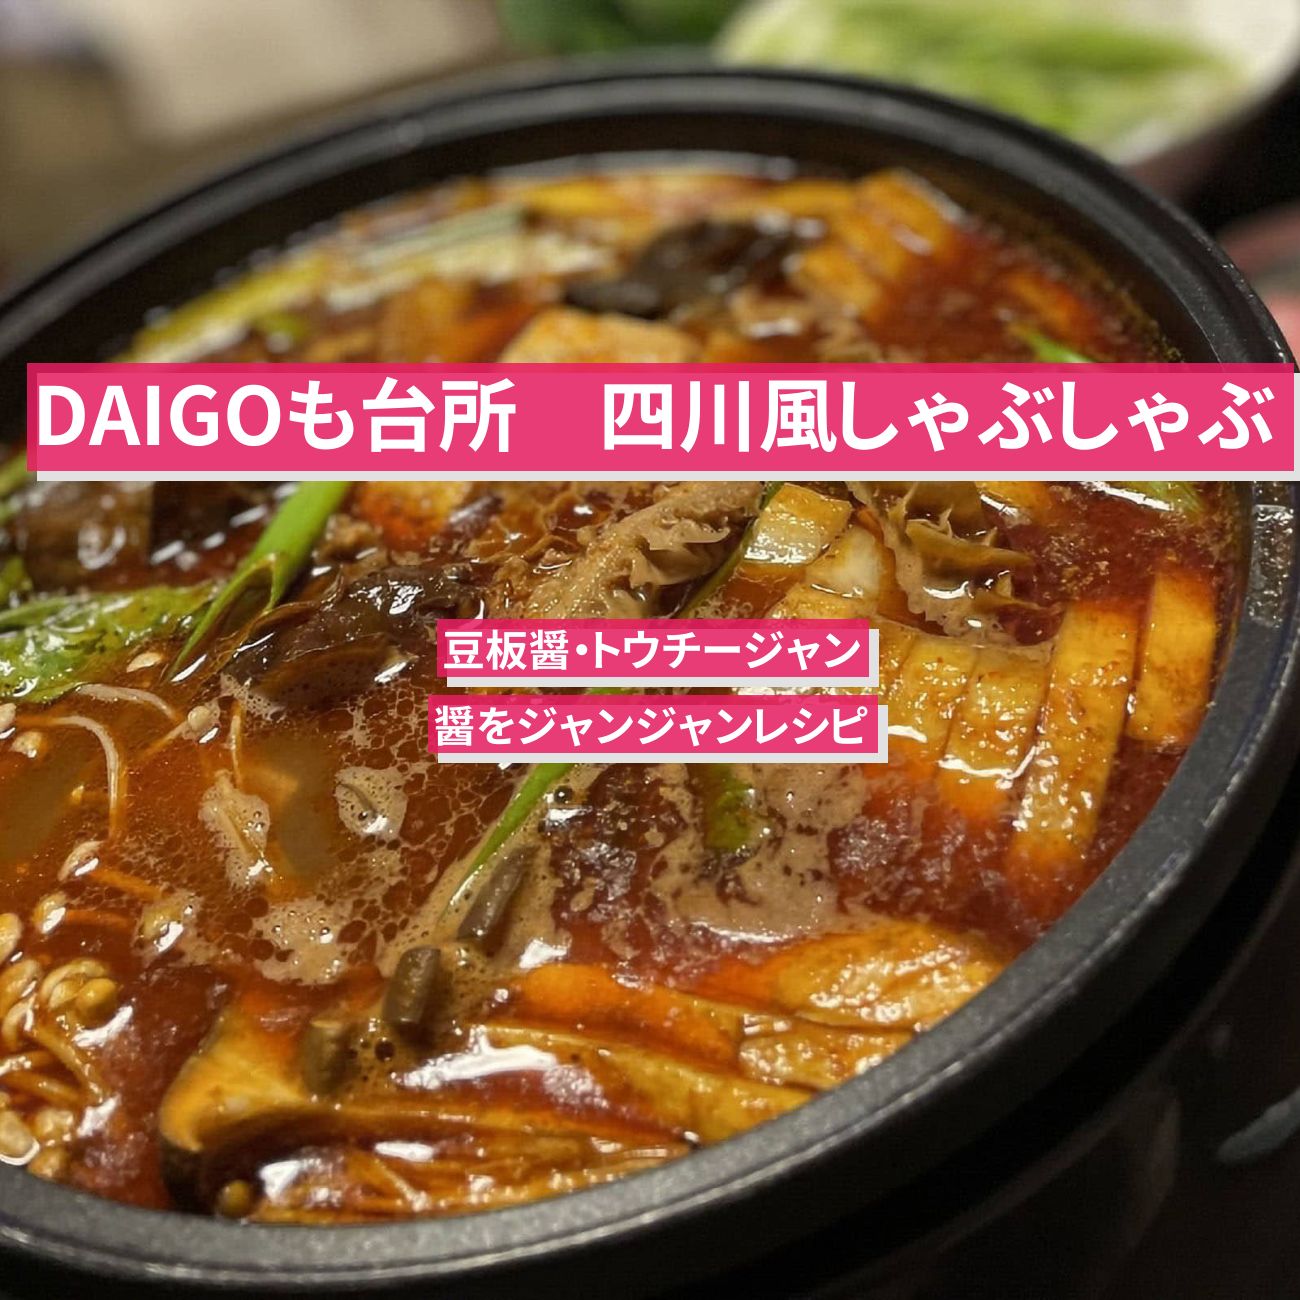 【DAIGOも台所】『四川風しゃぶしゃぶ』のレシピ・作り方を紹介